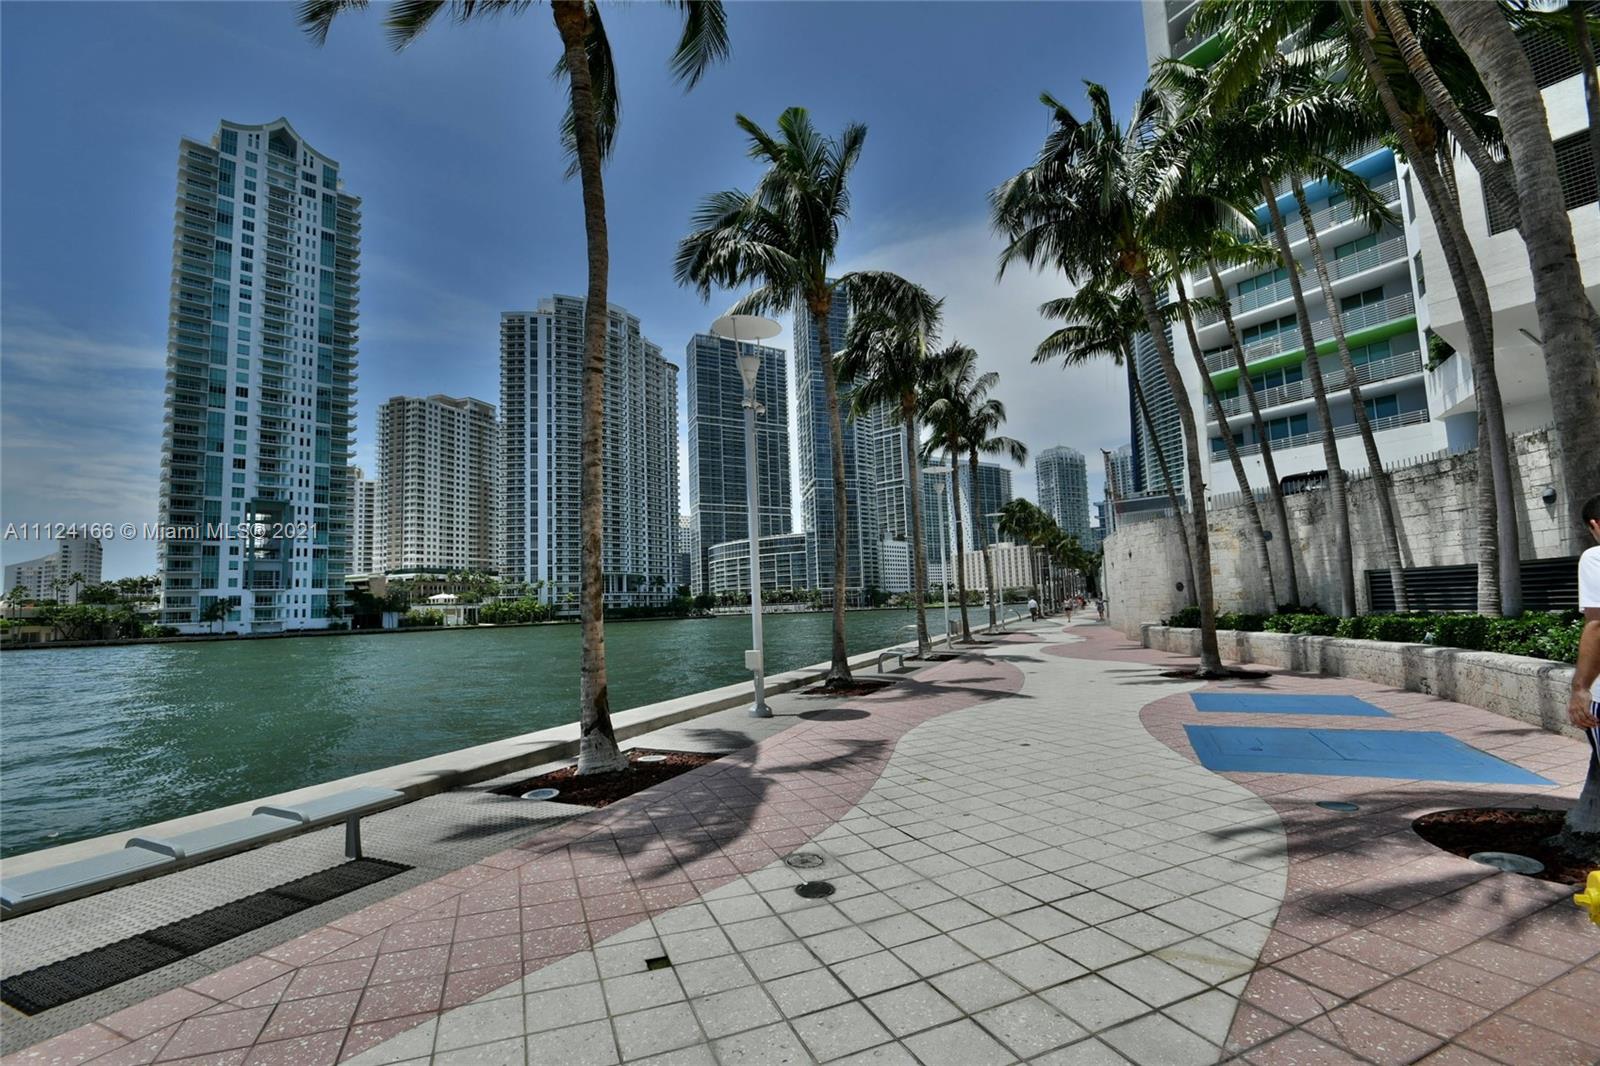 One Miami image #4